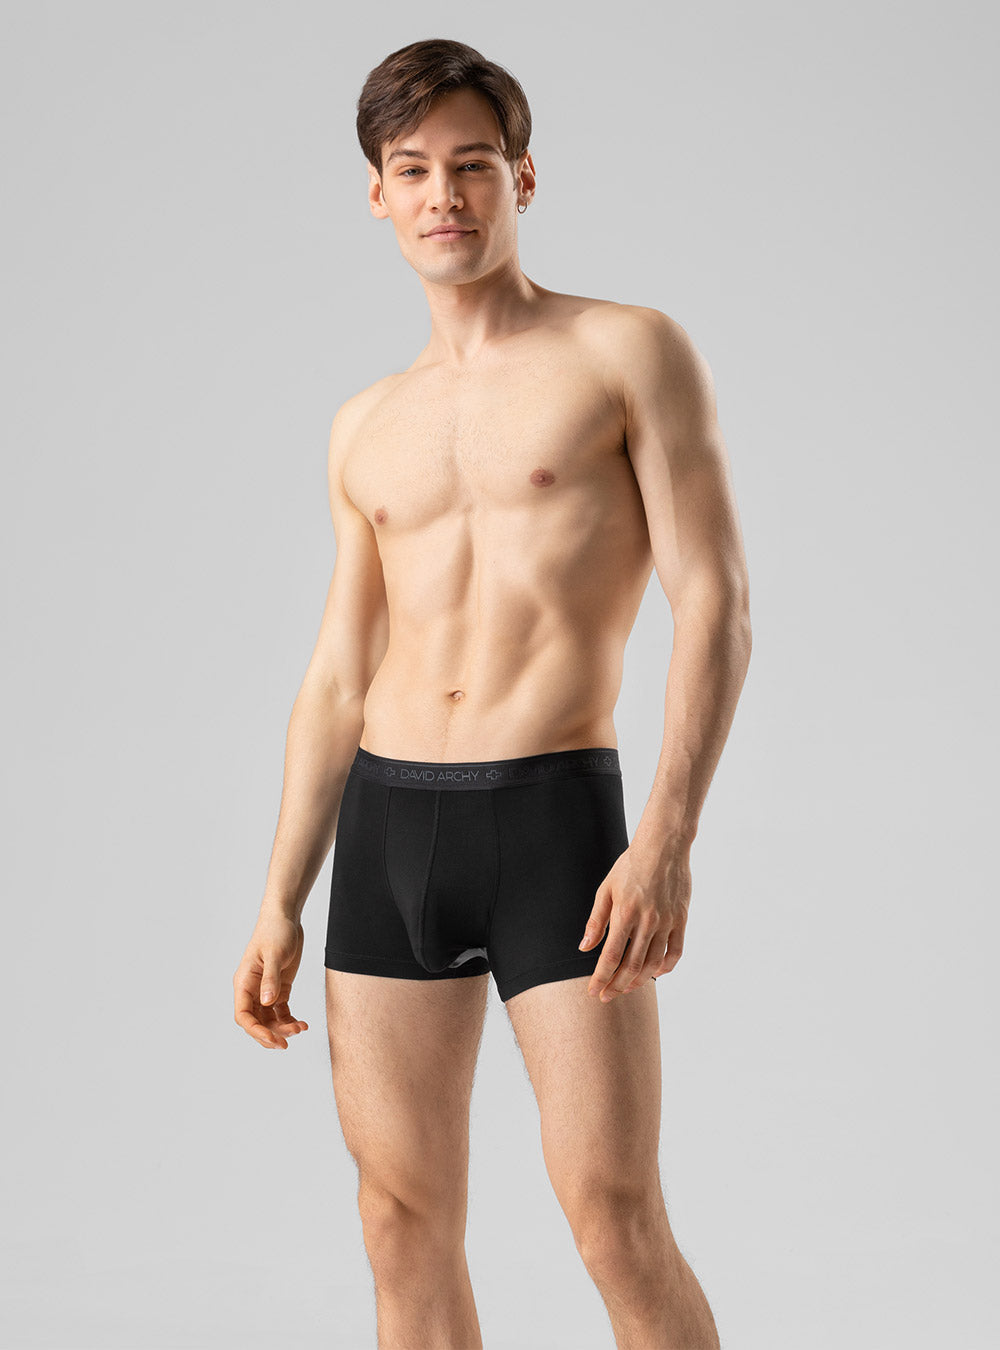 Separatec 2 Dual Pouch Men's Trunks Underwear XL 3-Pack